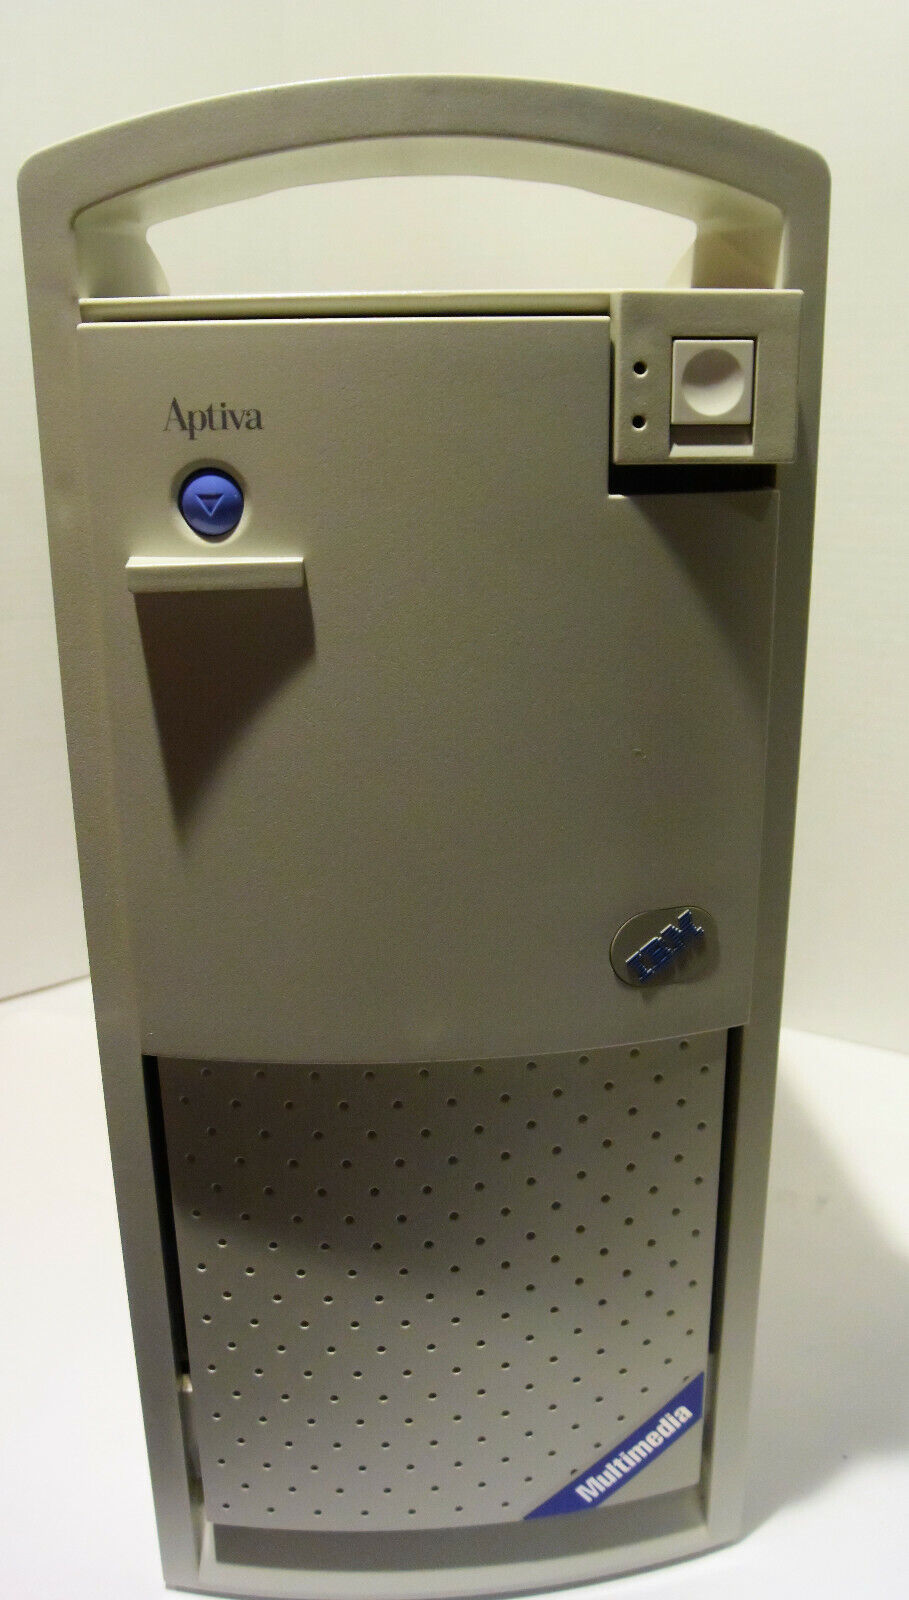 VINTAGE IBM Aptiva 2168-M58 (Intel Pentium 100MHz) PC Desktop Tower - Works